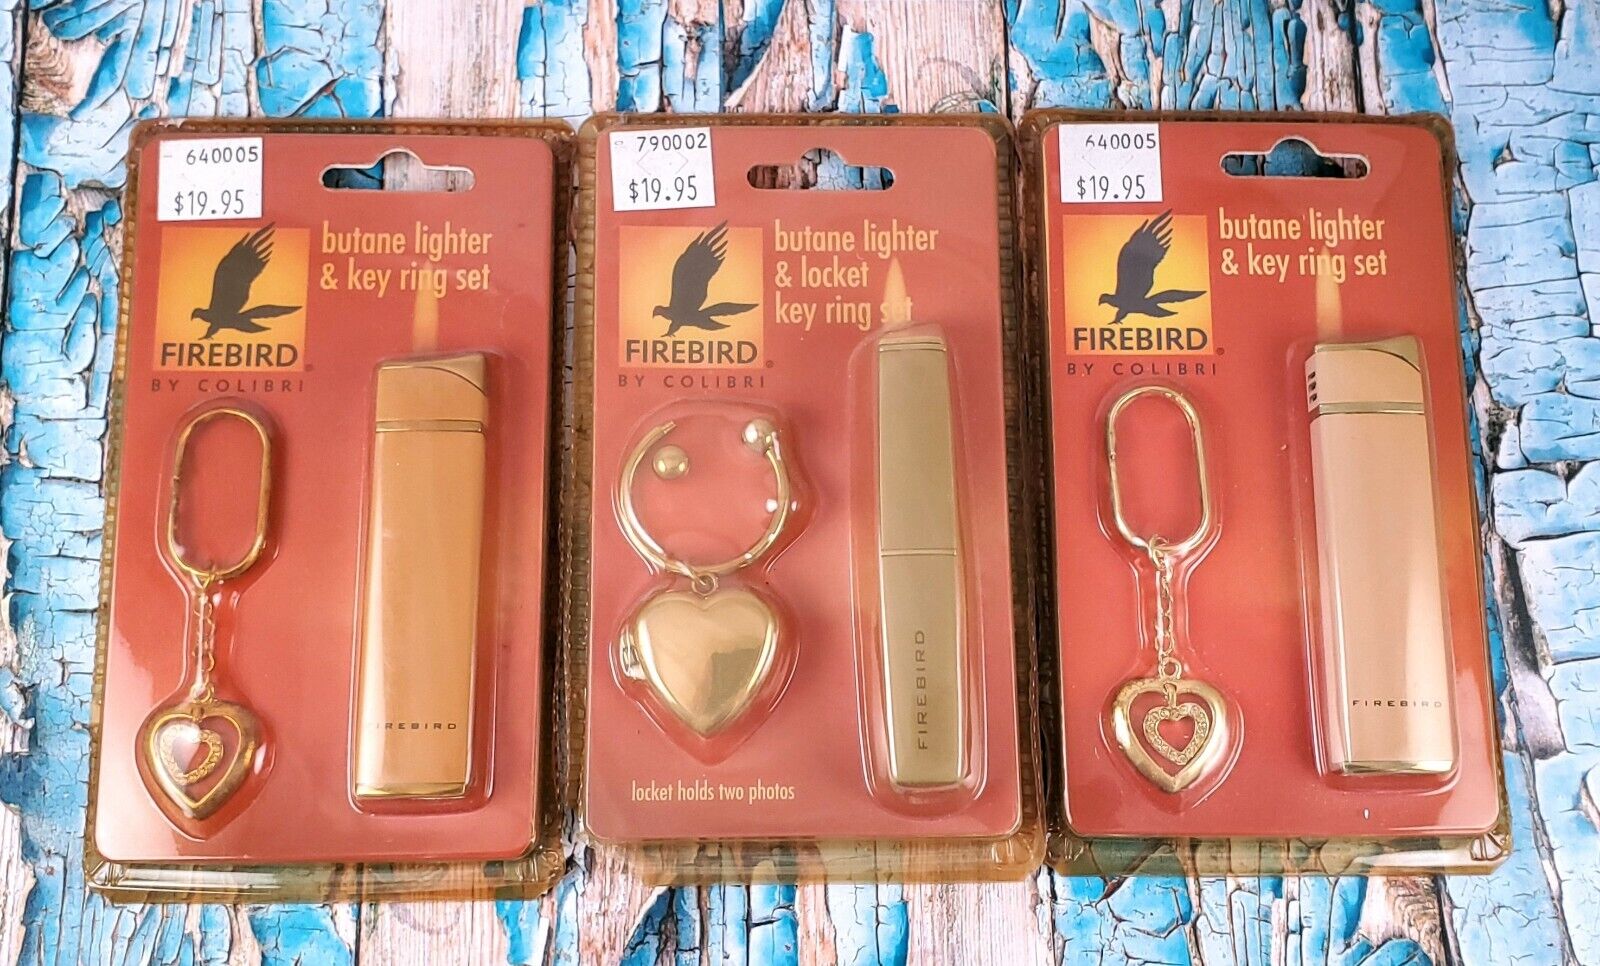 Firebird by Colibri Butane Lighter & Key Ring 3 Piece Set / Lot Pink Slim